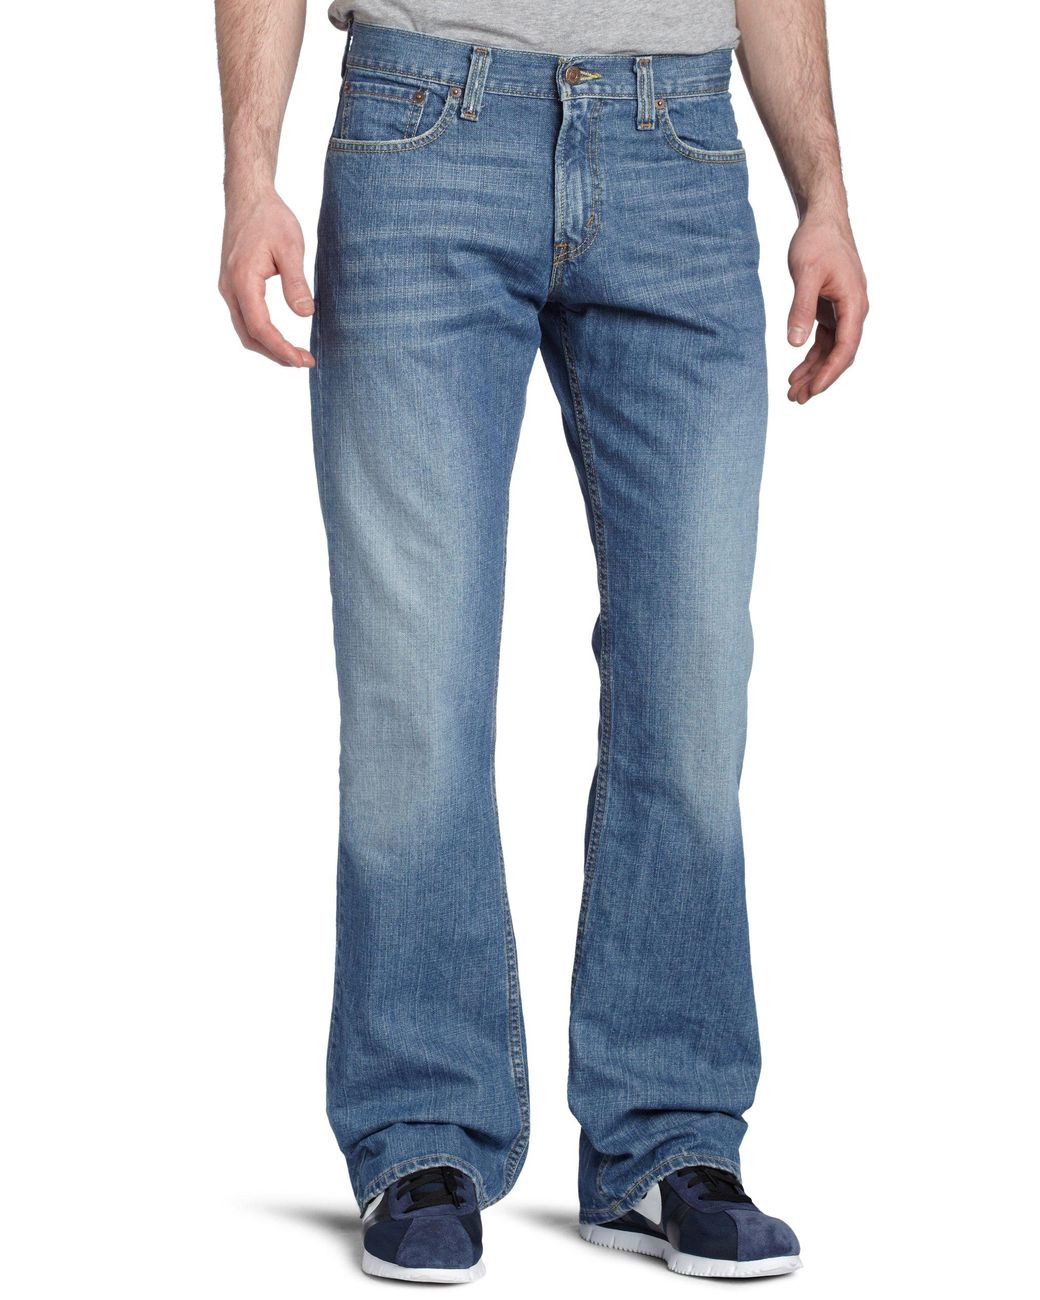 Levi's 527 Slim Boot Cut Jean,blue Jay,29x32 for Men - Lyst